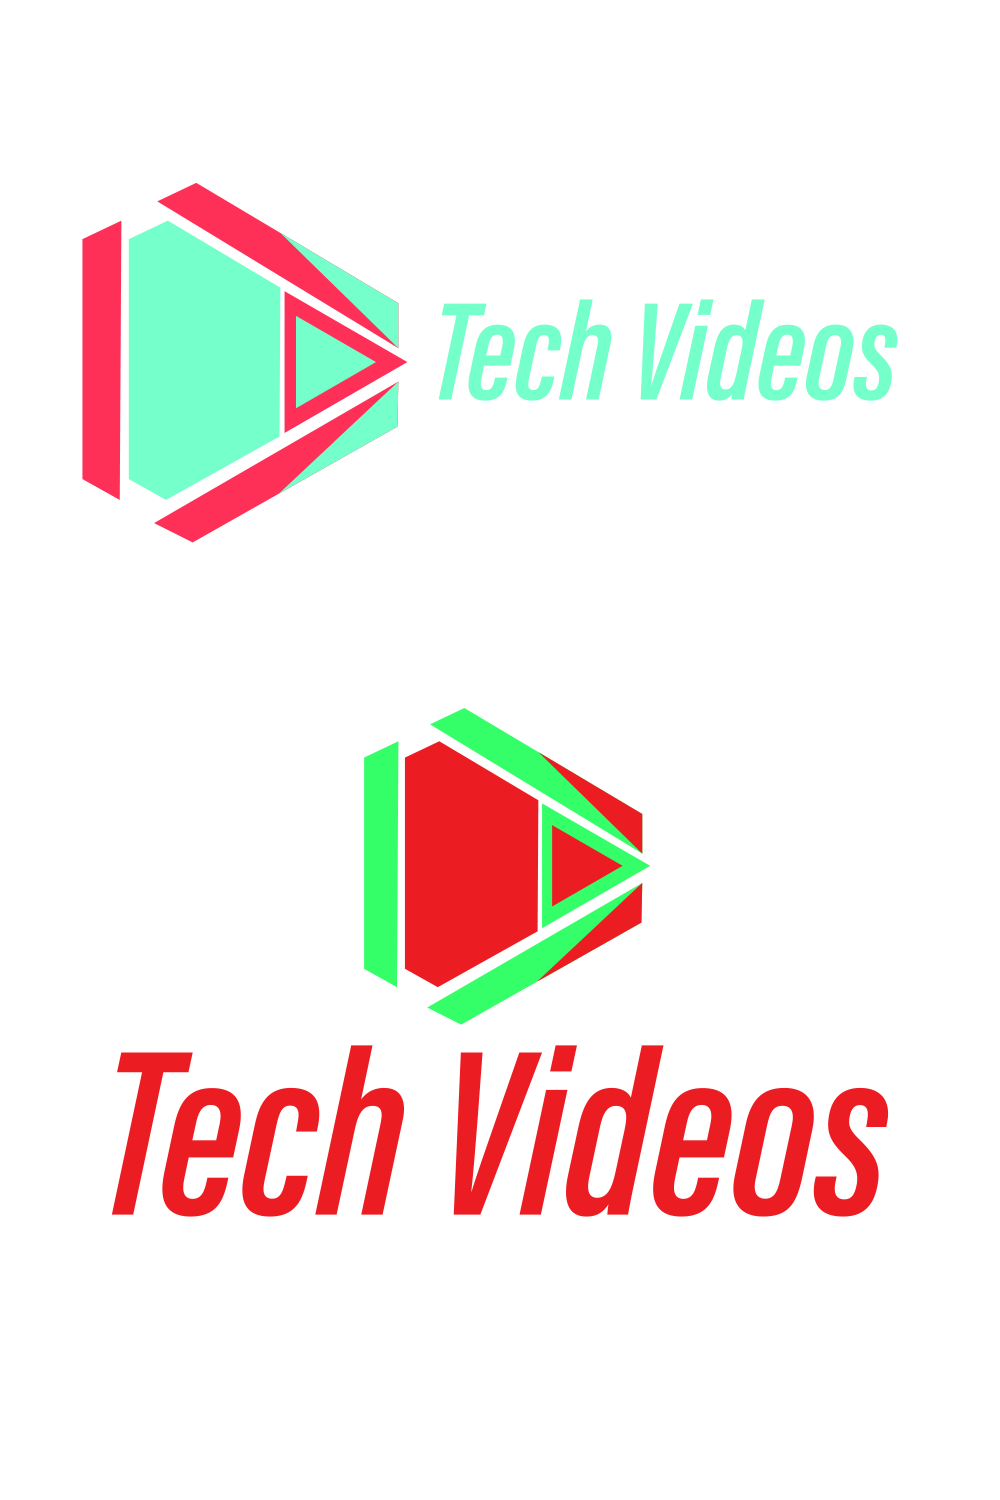 Video Icon Logo pinterest image.